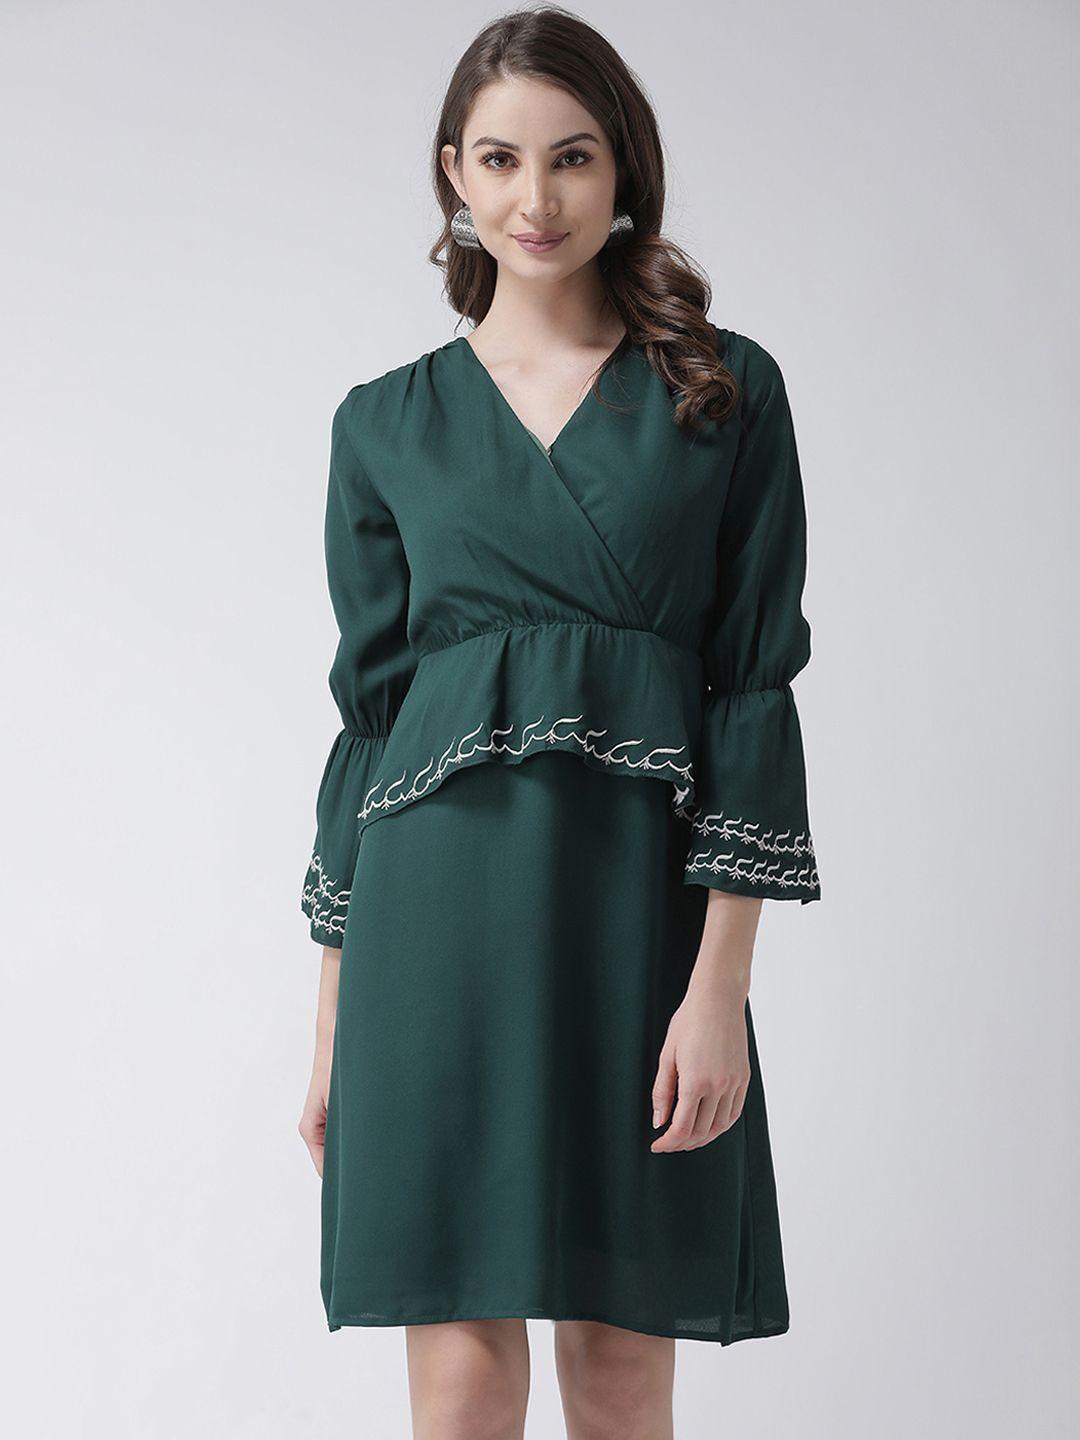 kassually women green printed peplum dress